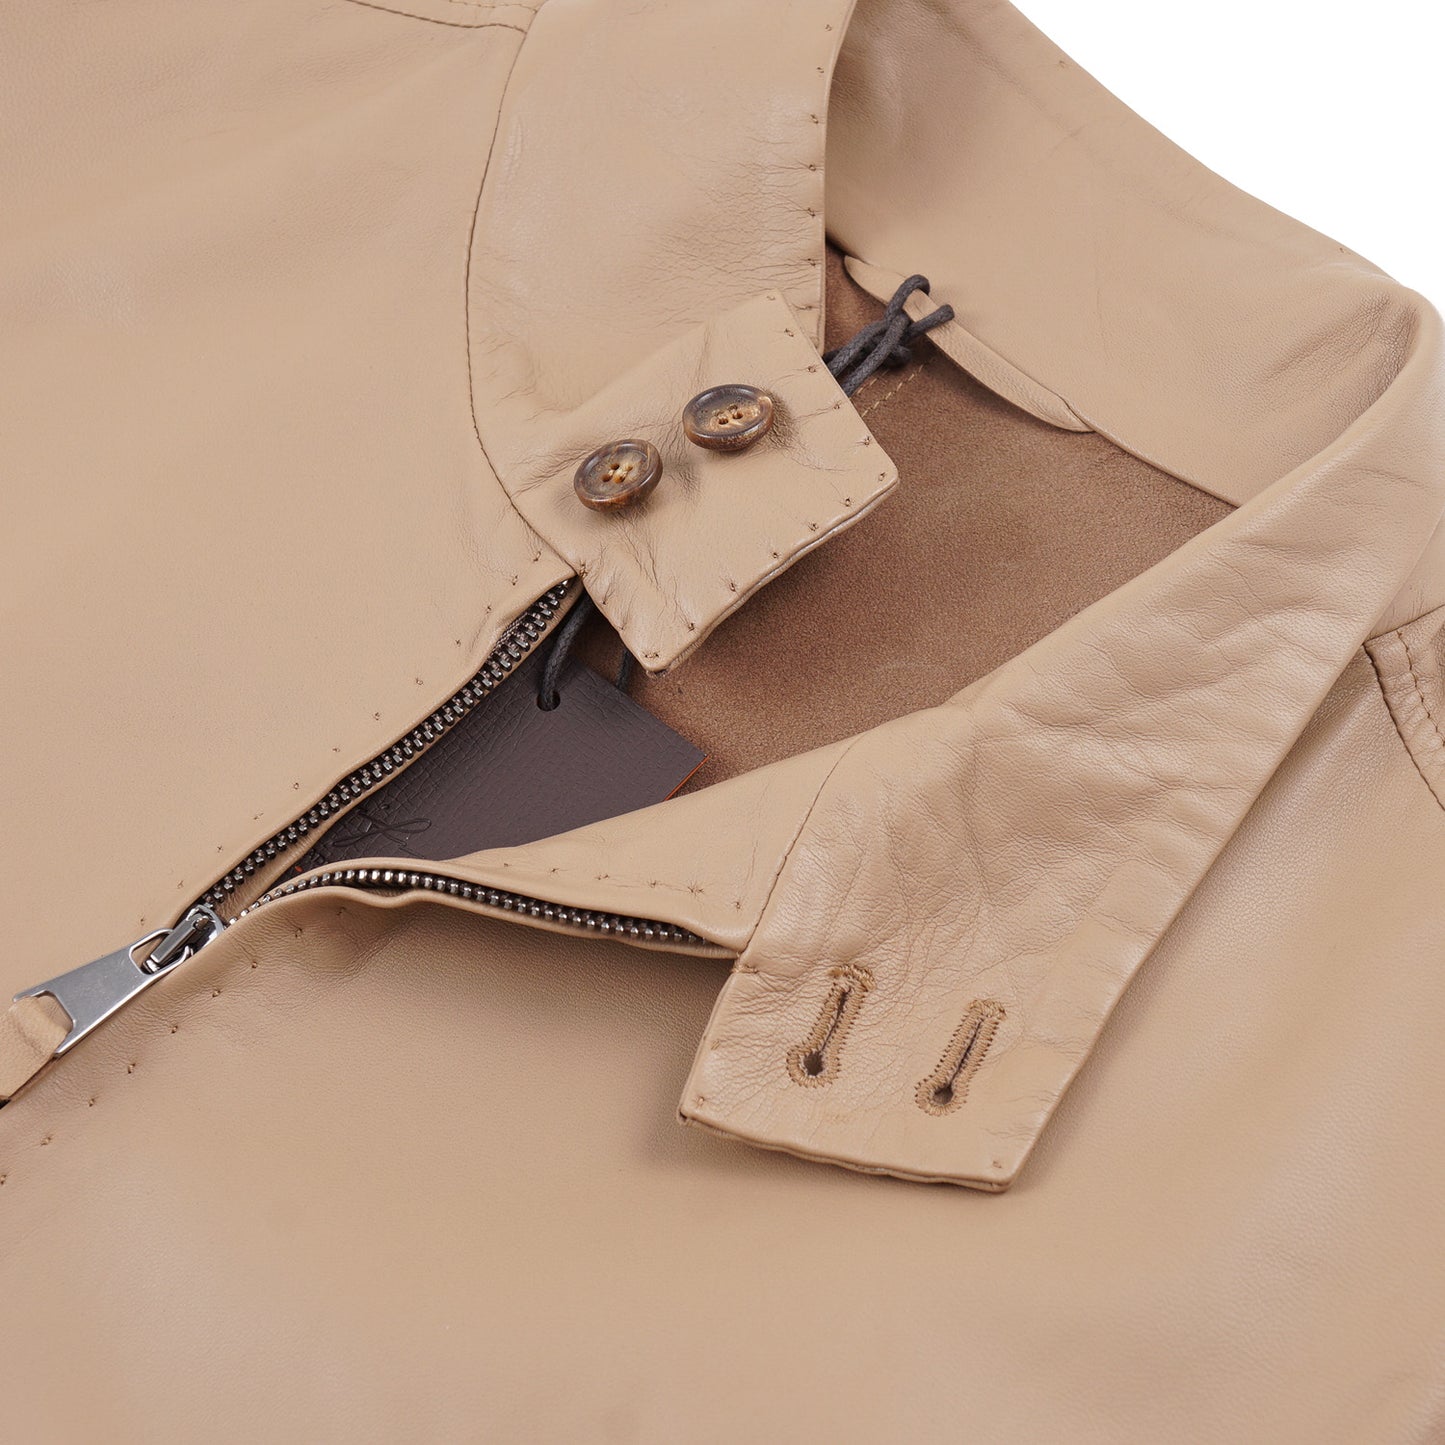 Rifugio Nappa Lambskin Leather Jacket - Top Shelf Apparel